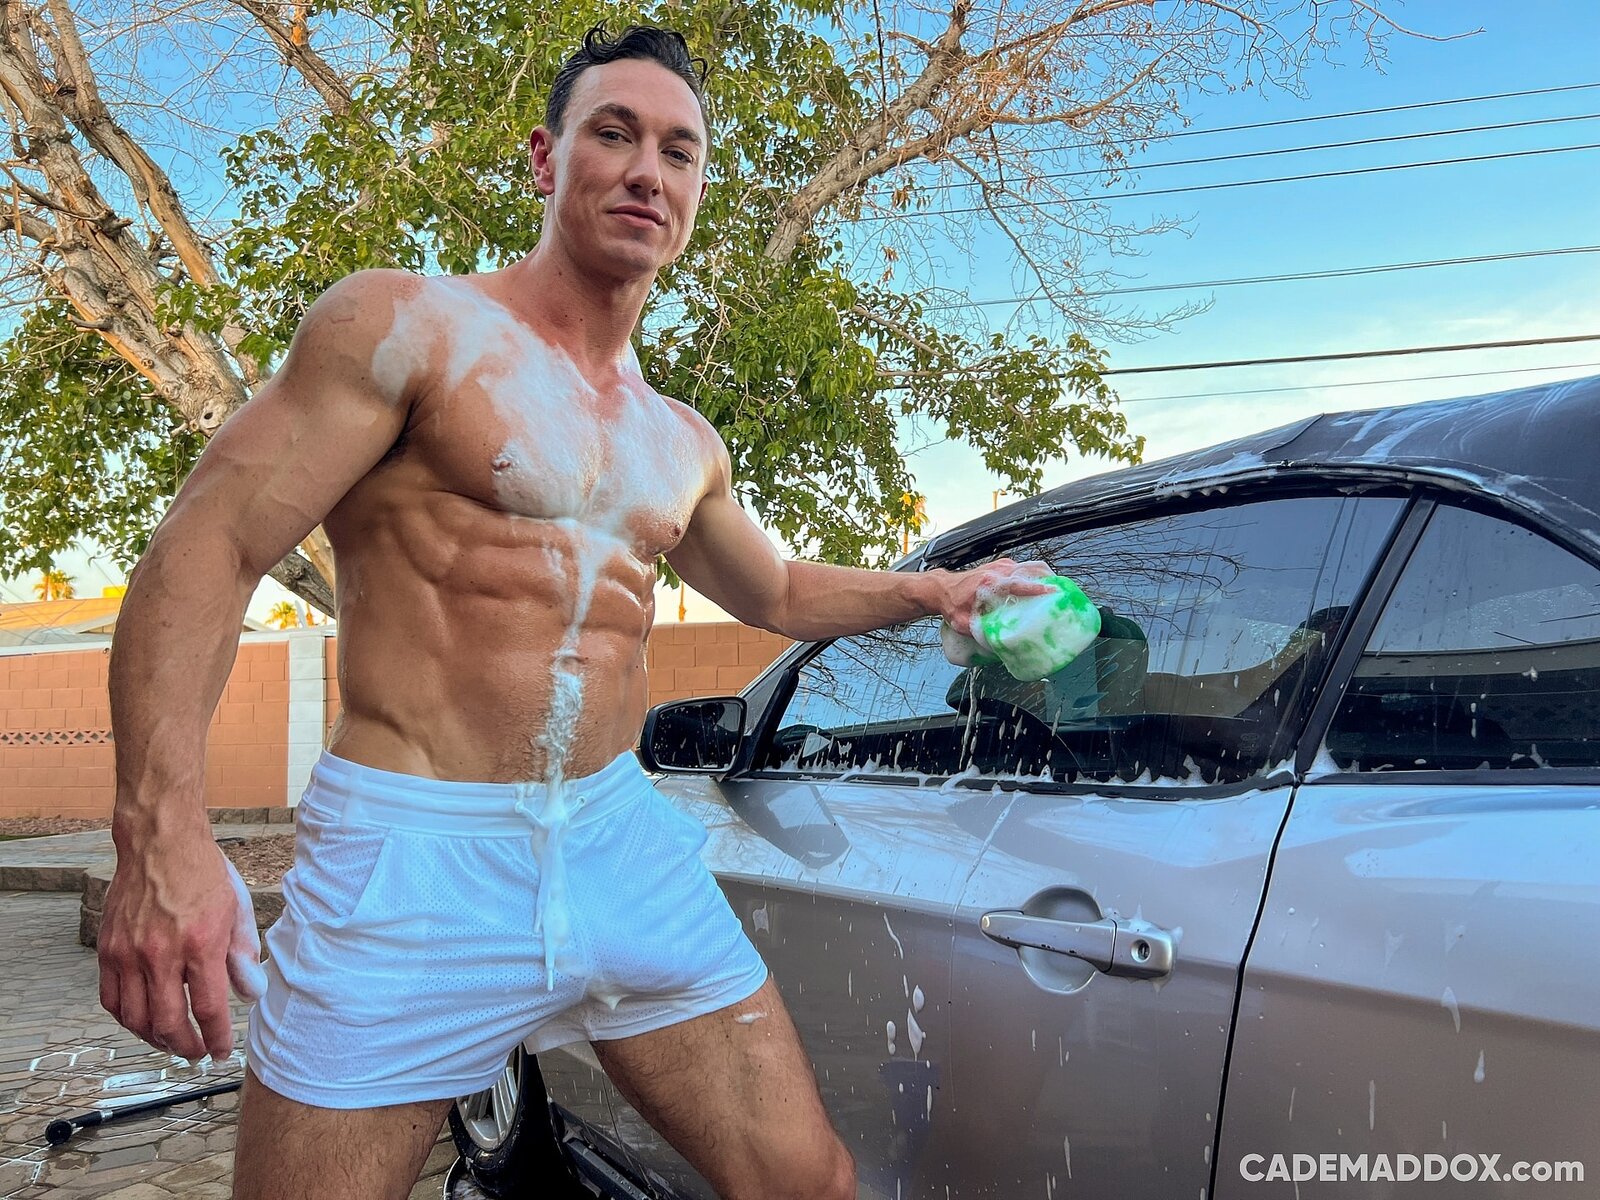 dini fitriani share naked men car wash photos